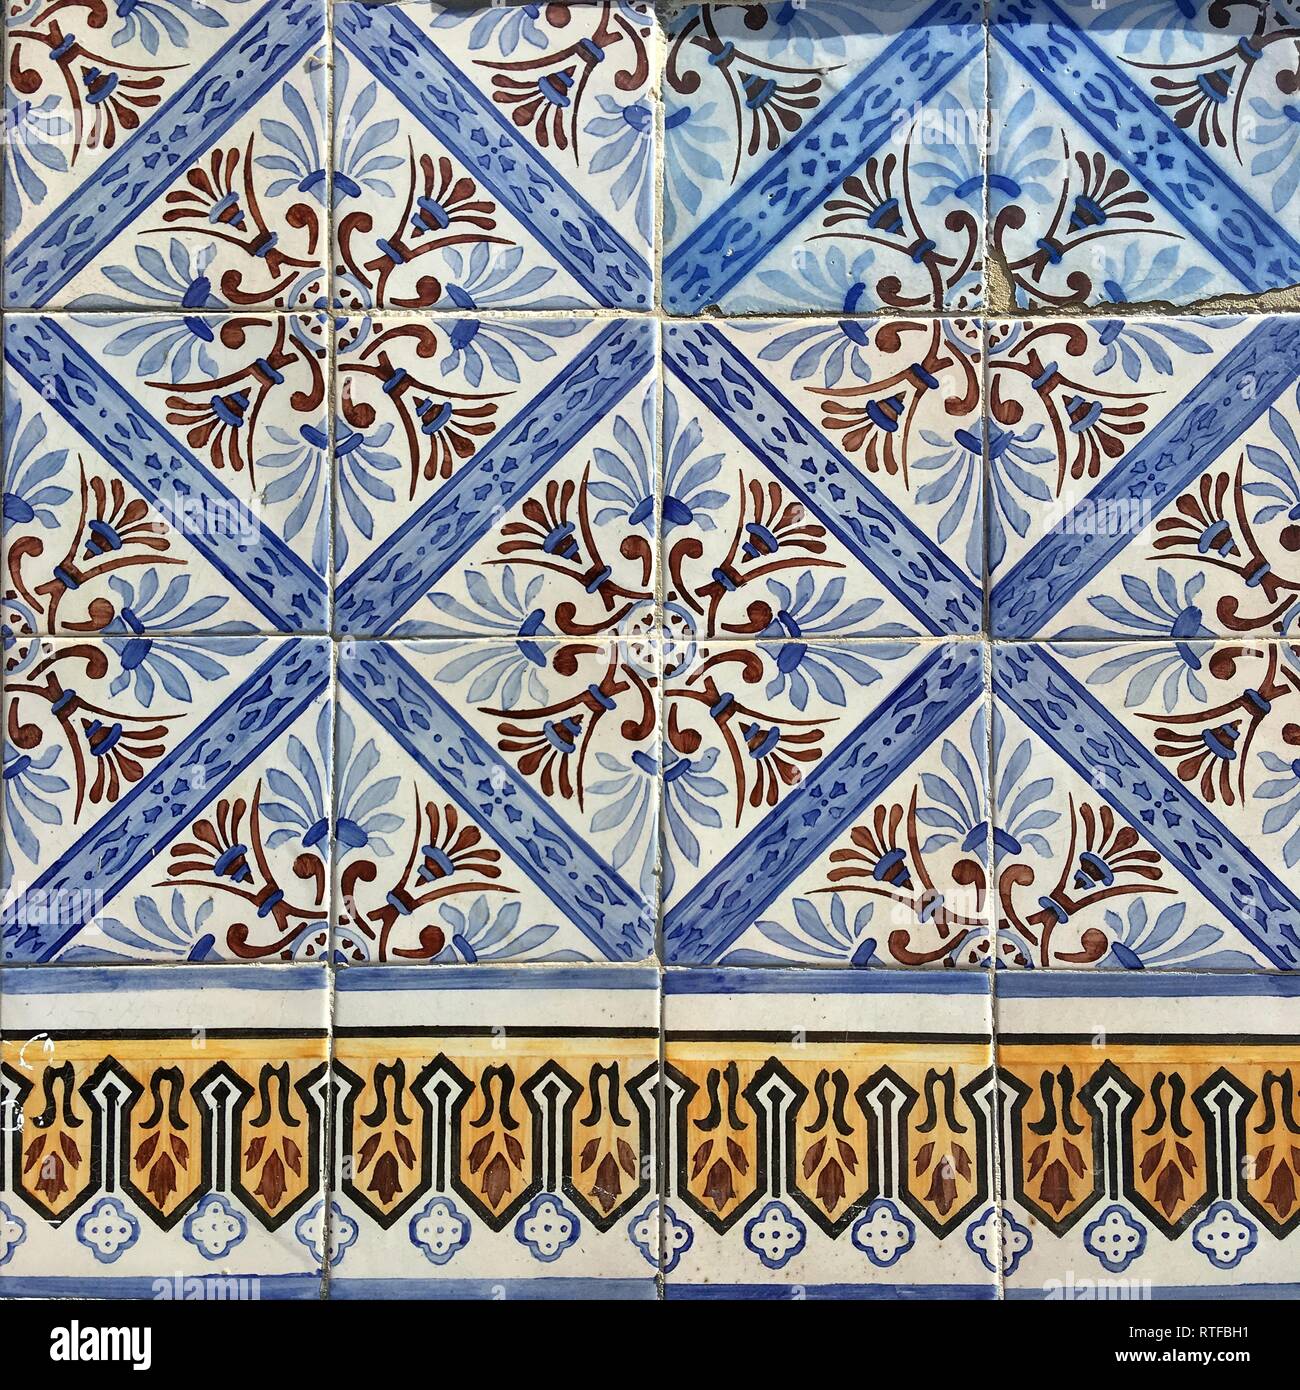 Tile pattern, detail of a tiled house facade, Lisbon, Portugal Stock Photo